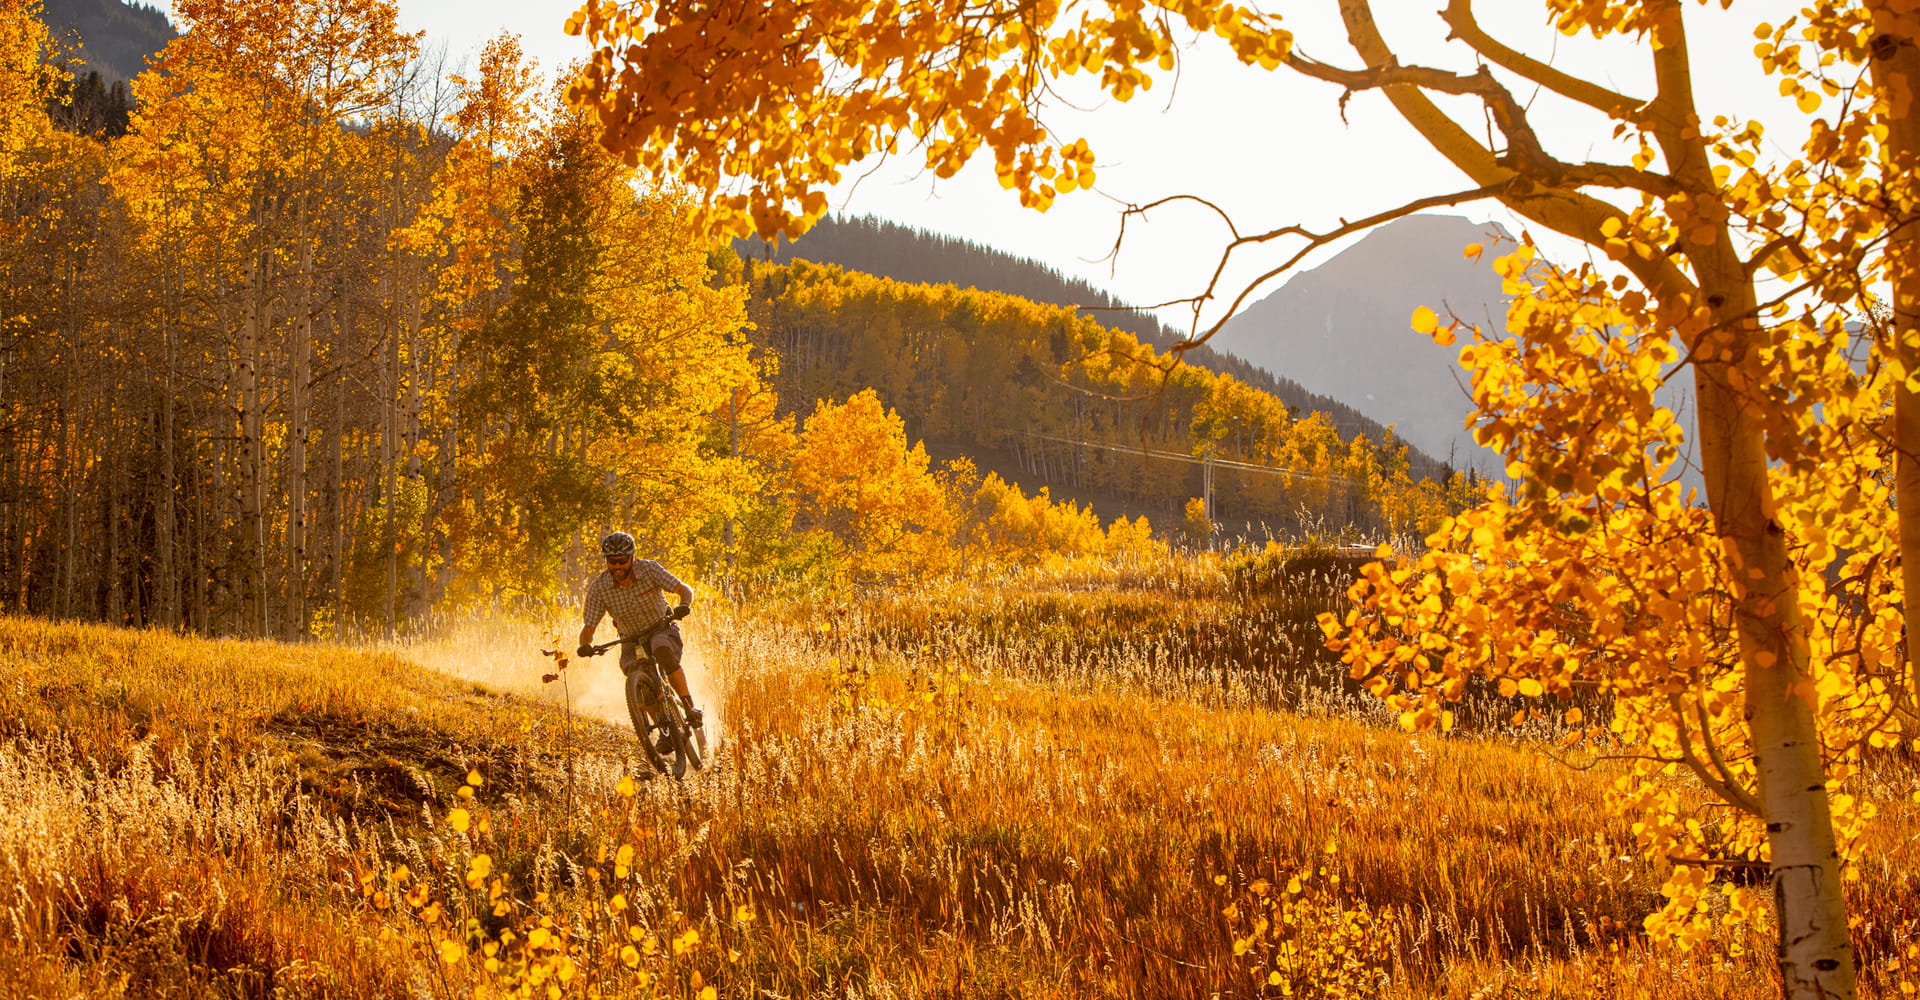 Mountain biking through autumn splendor and golden aspen trees